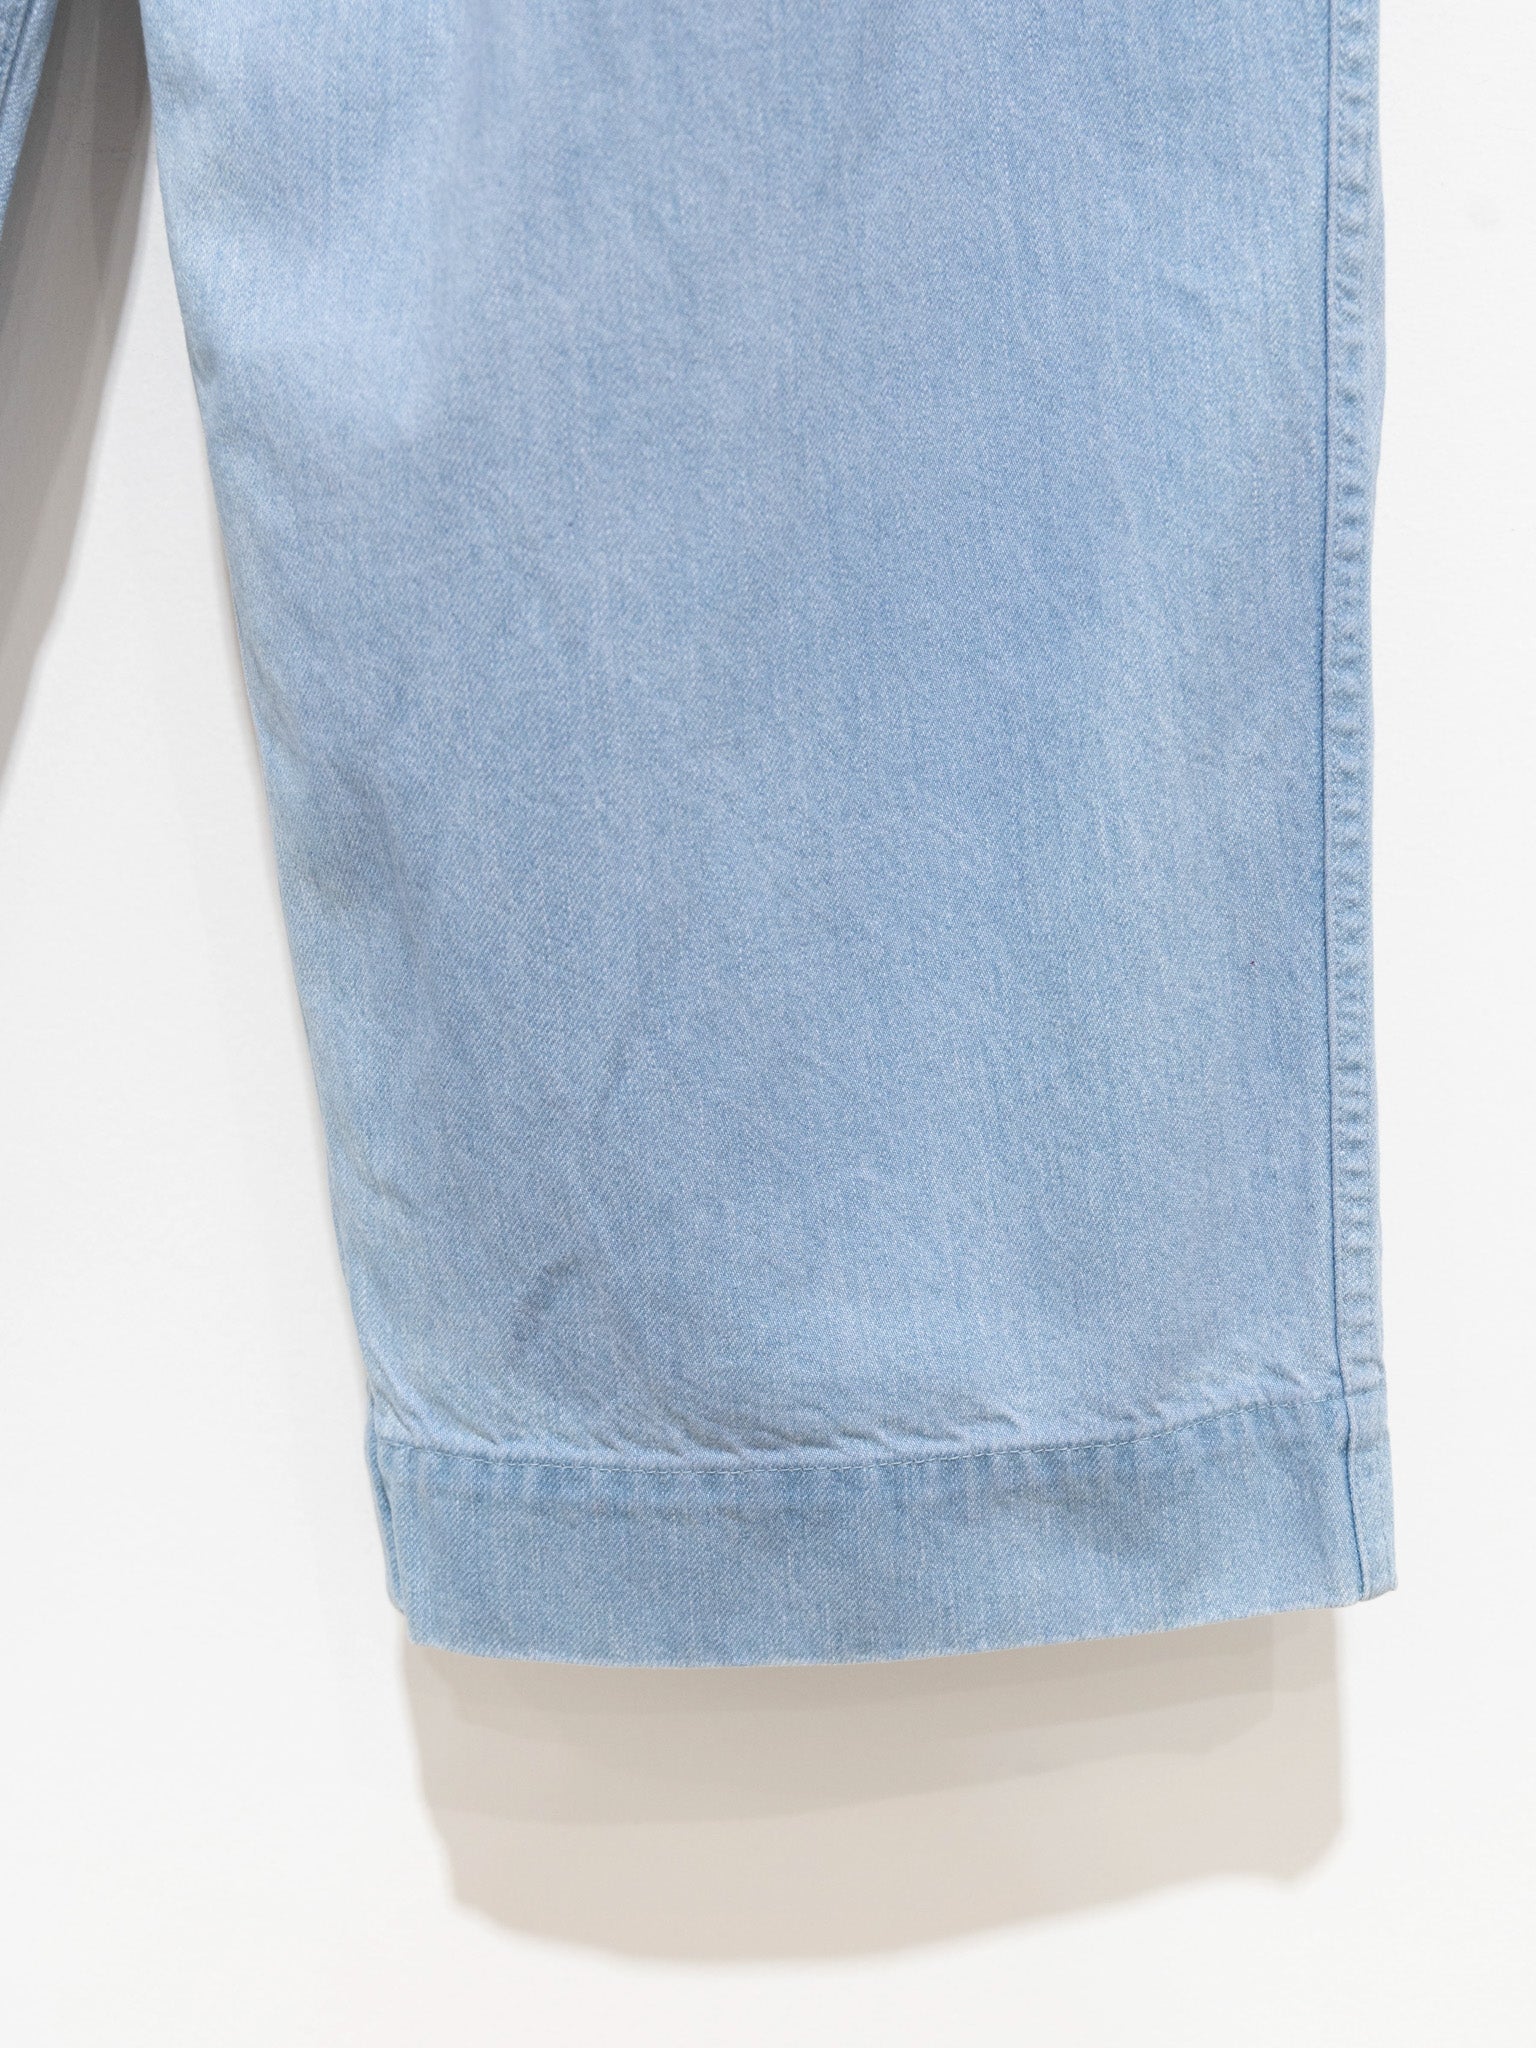 Namu Shop - Veritecoeur Belted Pants - Light Blue Indigo